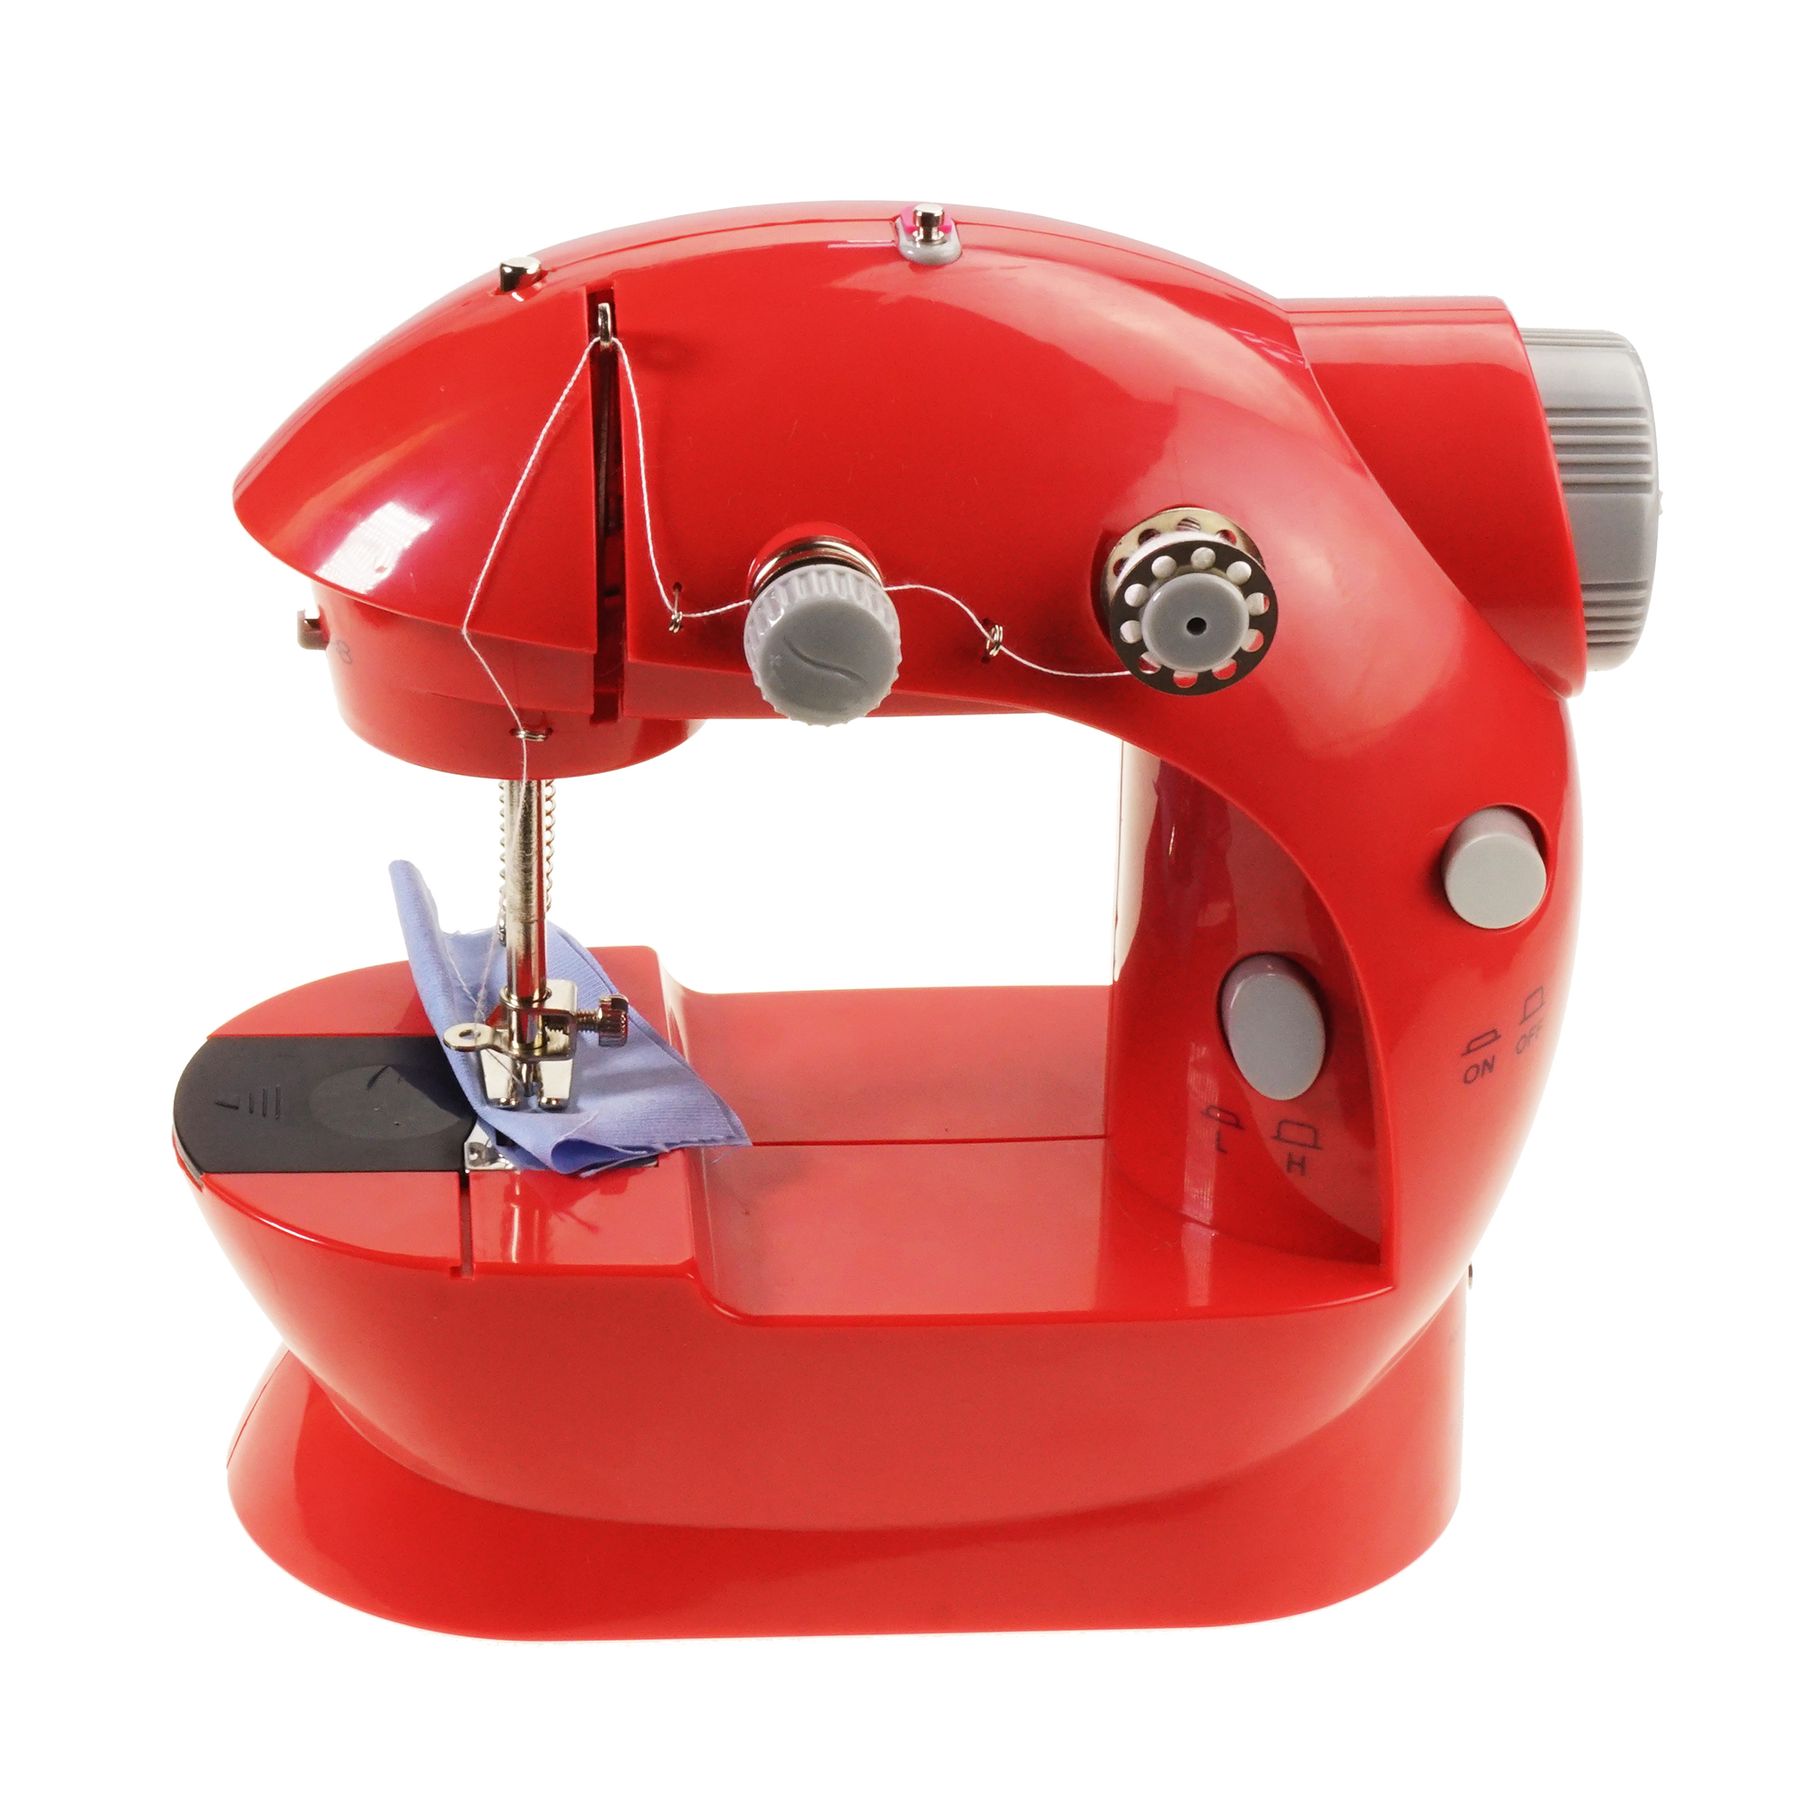 Мини машинка леомакс. Швейная машинка помощница/ Mini Sewing Machine SM-202a. Мини швейная машина 4в1 Mini. Швейная машинка помощница леомакс. Мини швейная машинка Mini Sewing Machine.